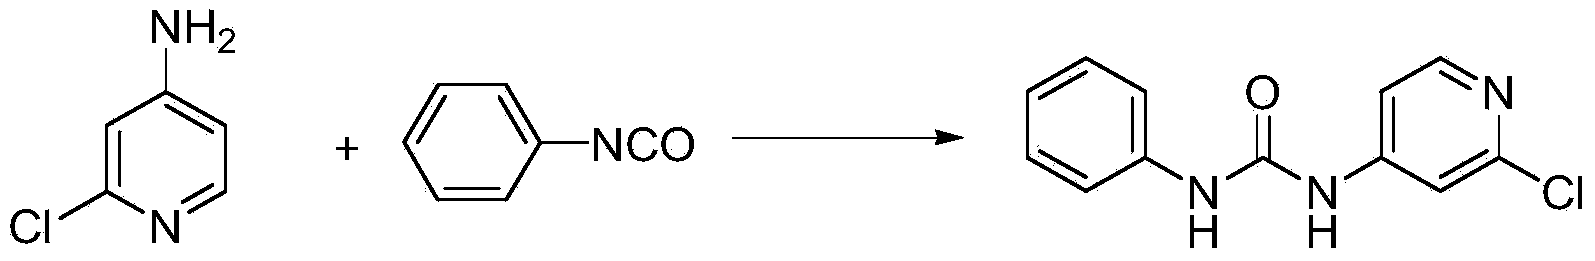 Preparation method of 1-(2-chloro-4-pyridyl)-3-phenylurea